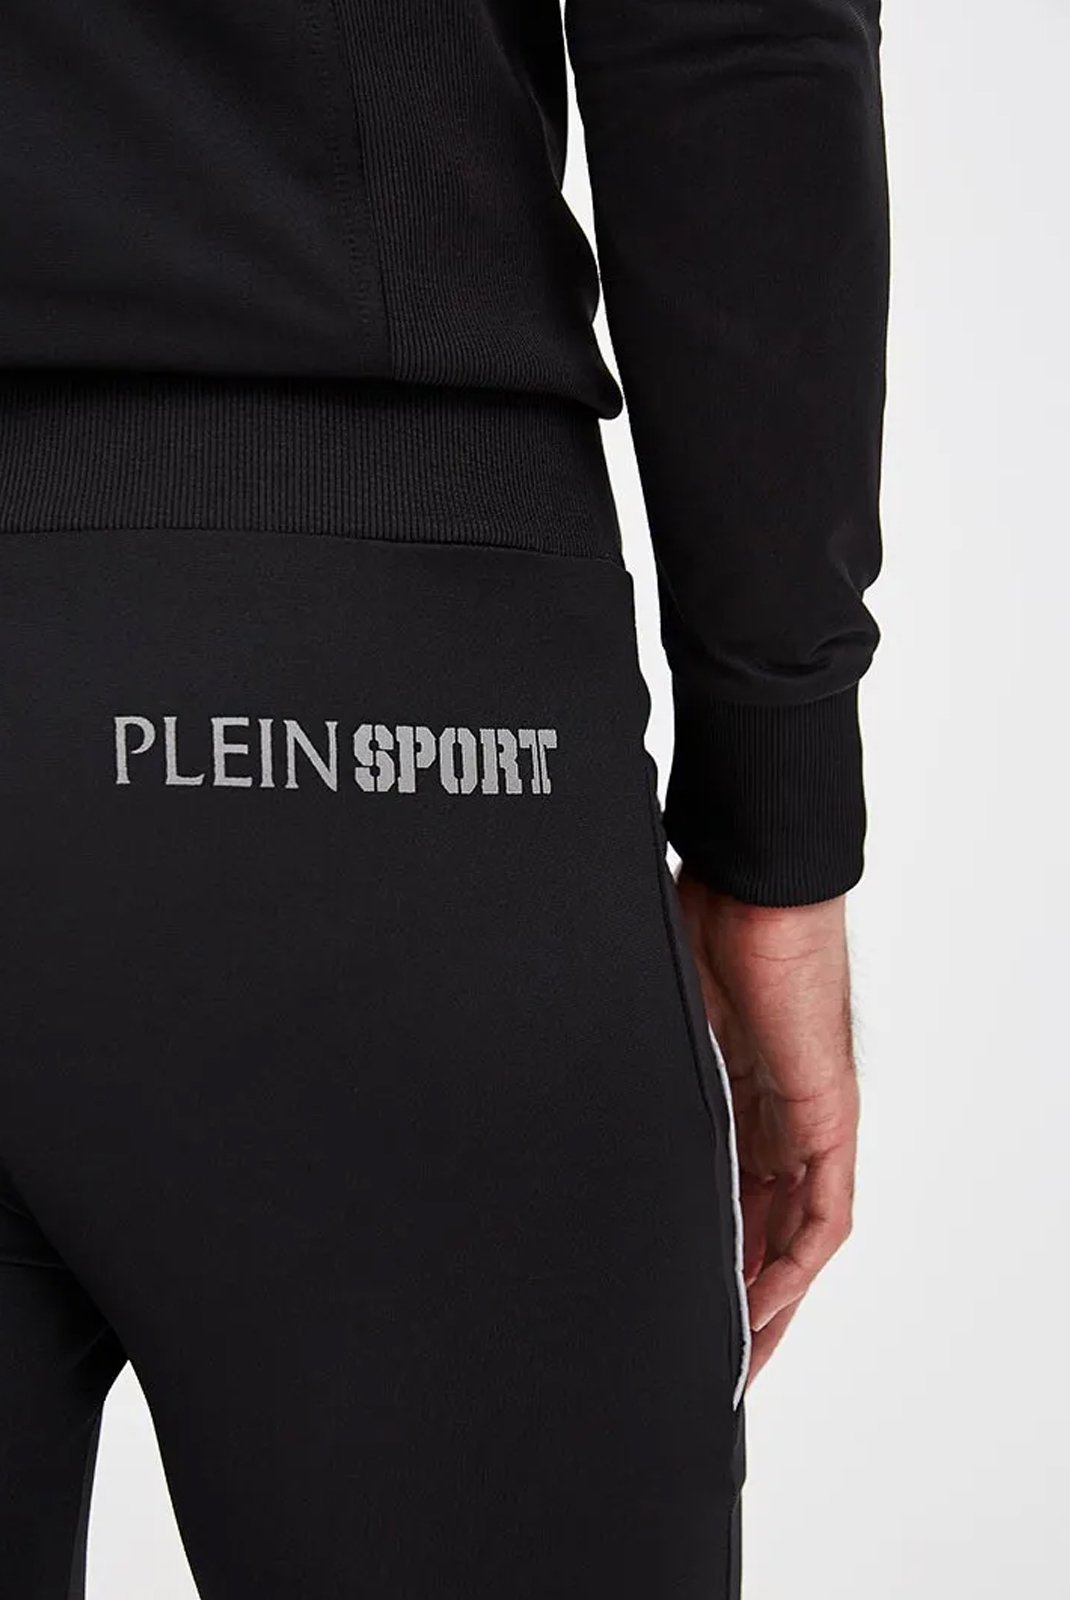 Pantalons sport/streetwear  Plein Sport MJT0725 02 BLACK